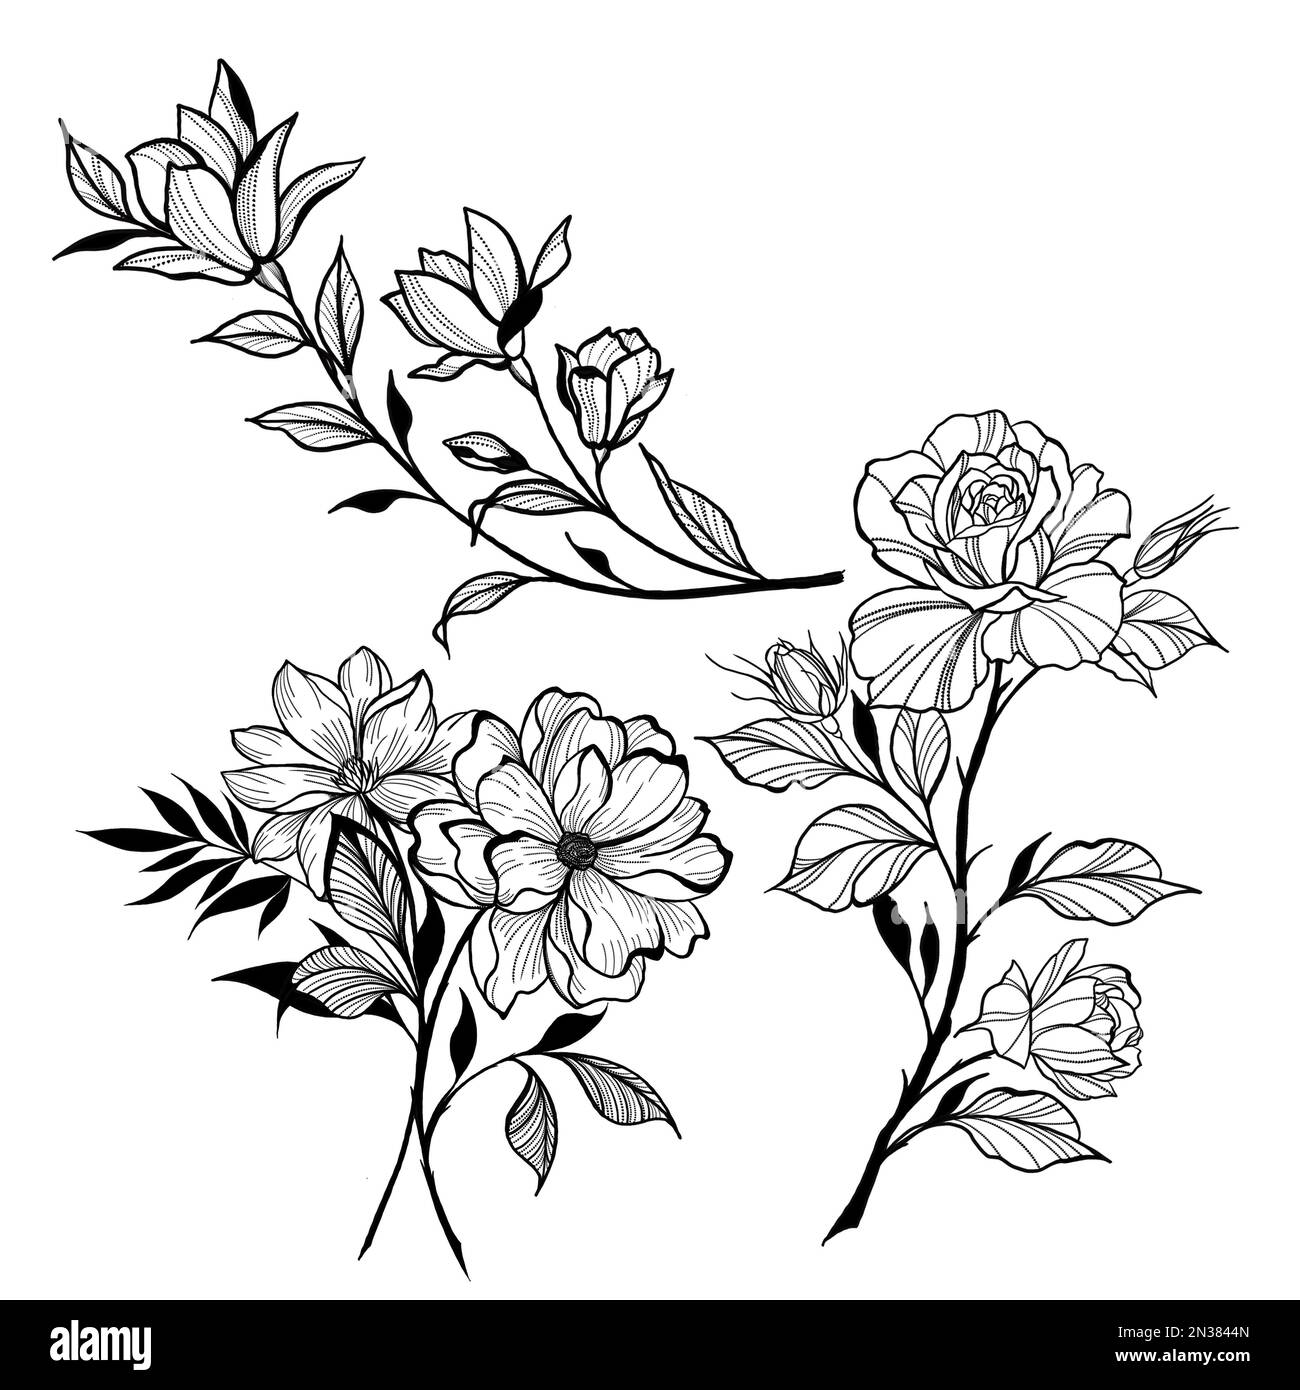 506,420 Outline Flower Draw Images, Stock Photos & Vectors | Shutterstock